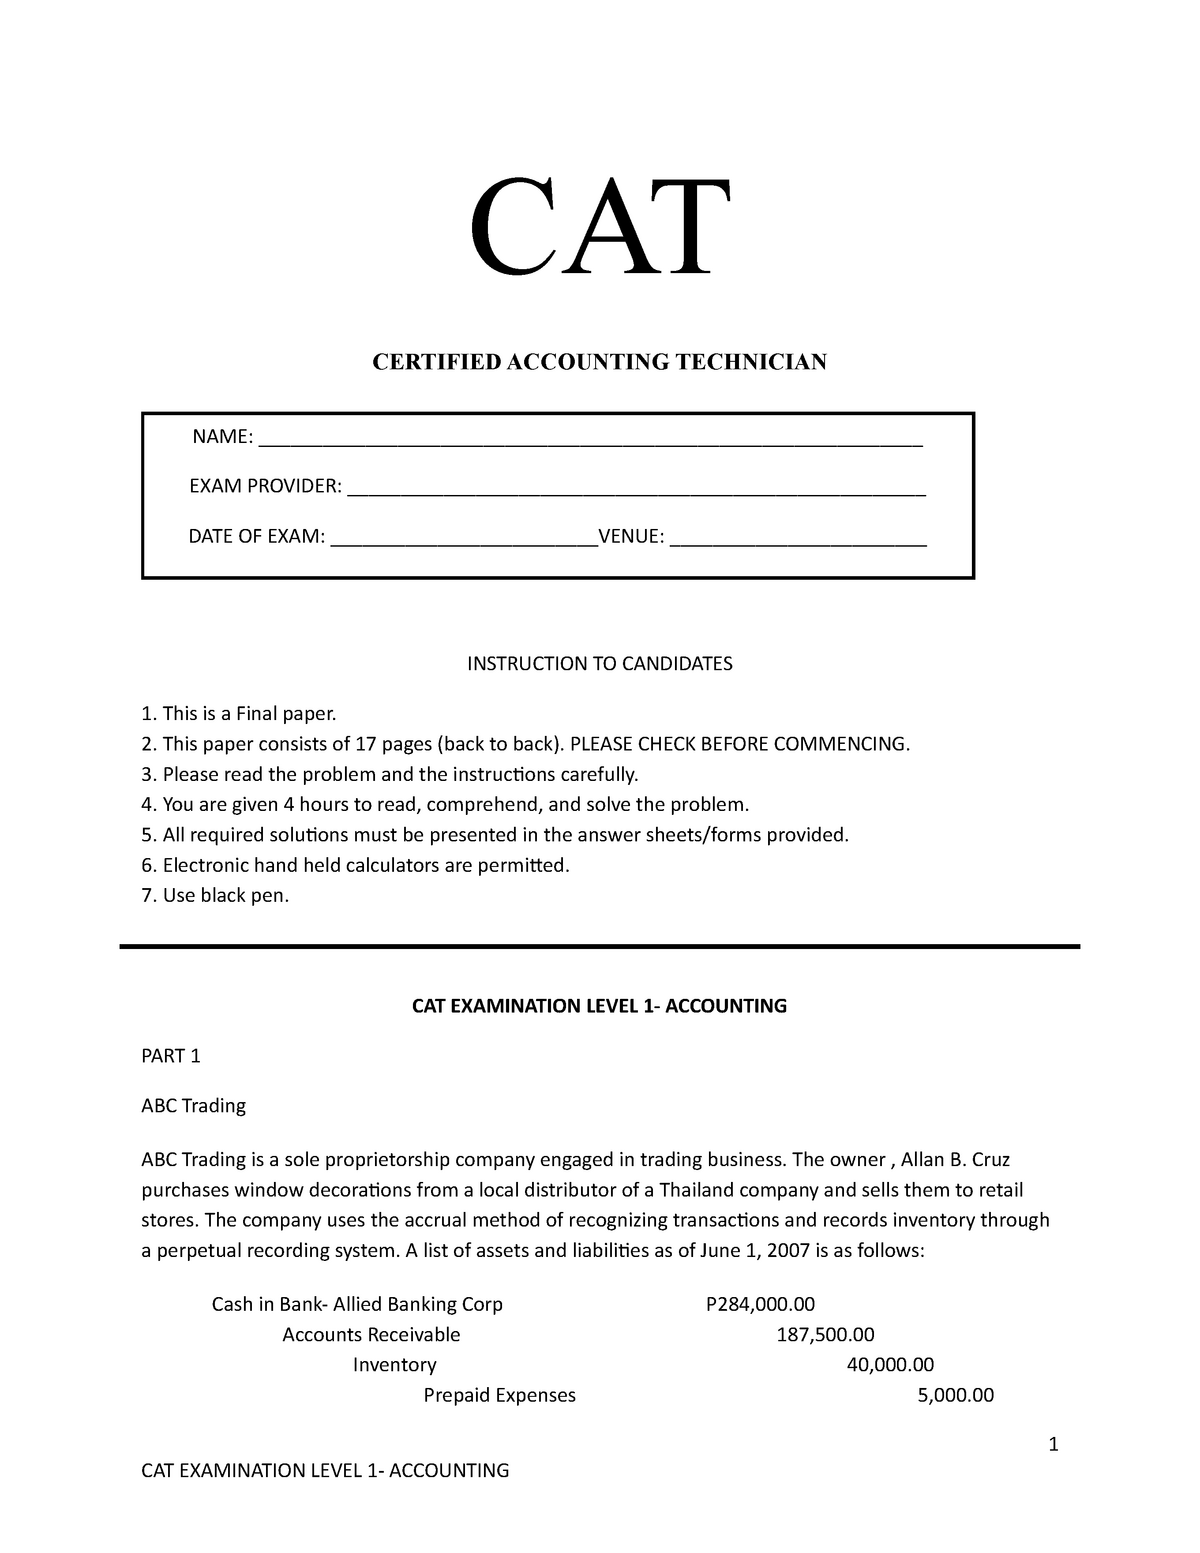 CAT exam 5 cat exam CAT CERTIFIED ACCOUNTING TECHNICIAN INSTRUCTION